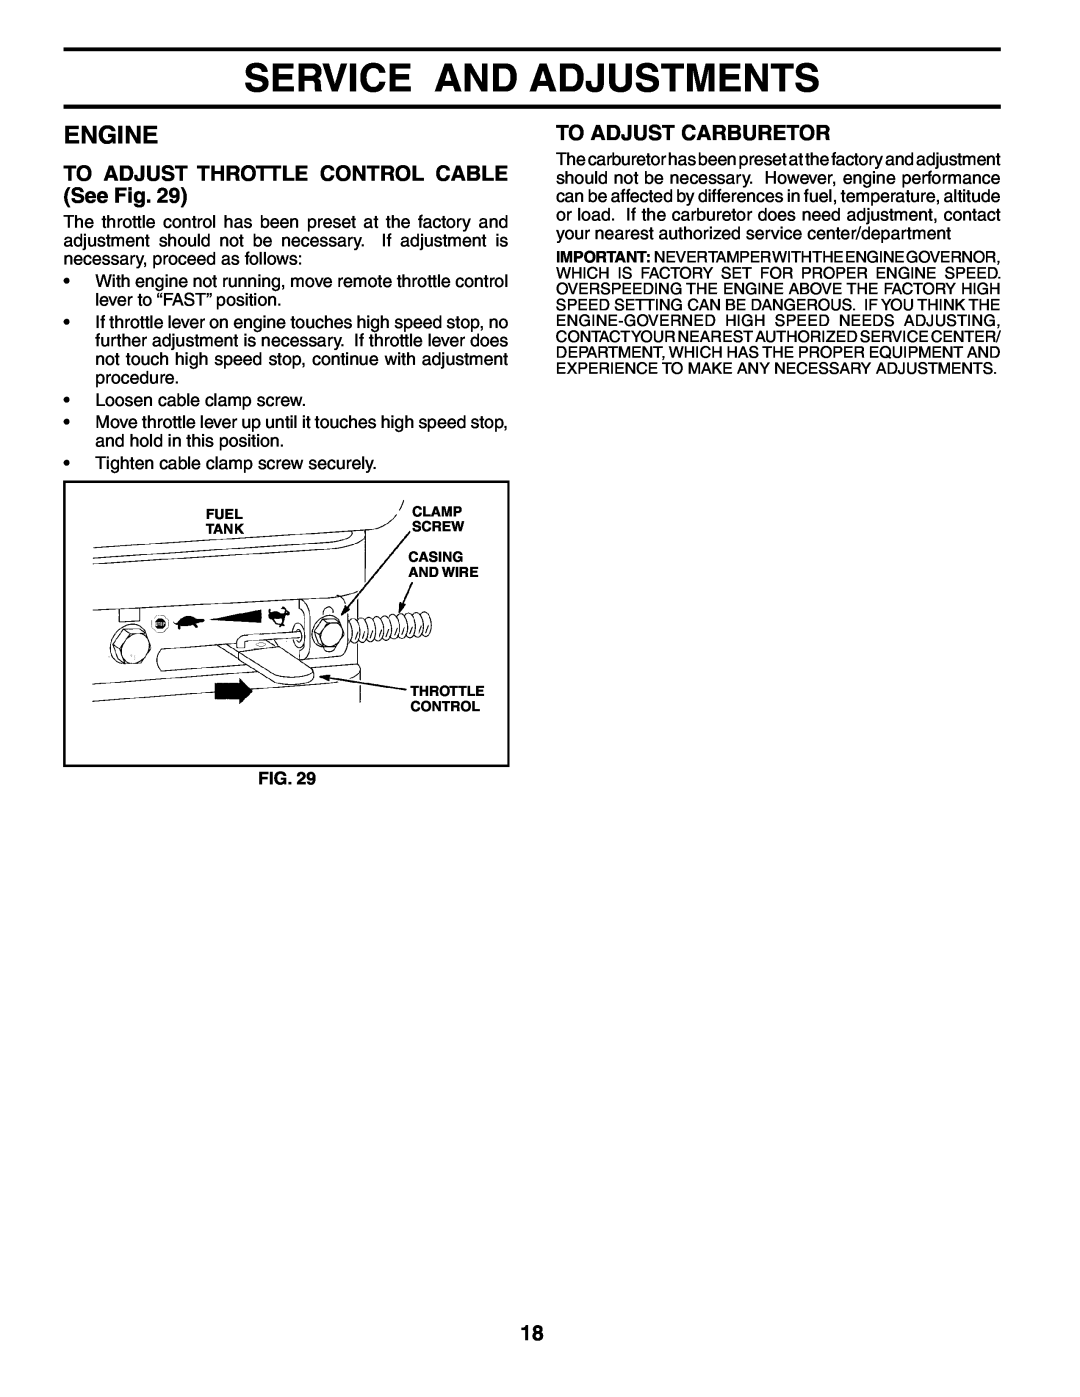 Poulan 190388 owner manual TO ADJUST THROTTLE CONTROL CABLE See Fig, To Adjust Carburetor, Service And Adjustments, Engine 